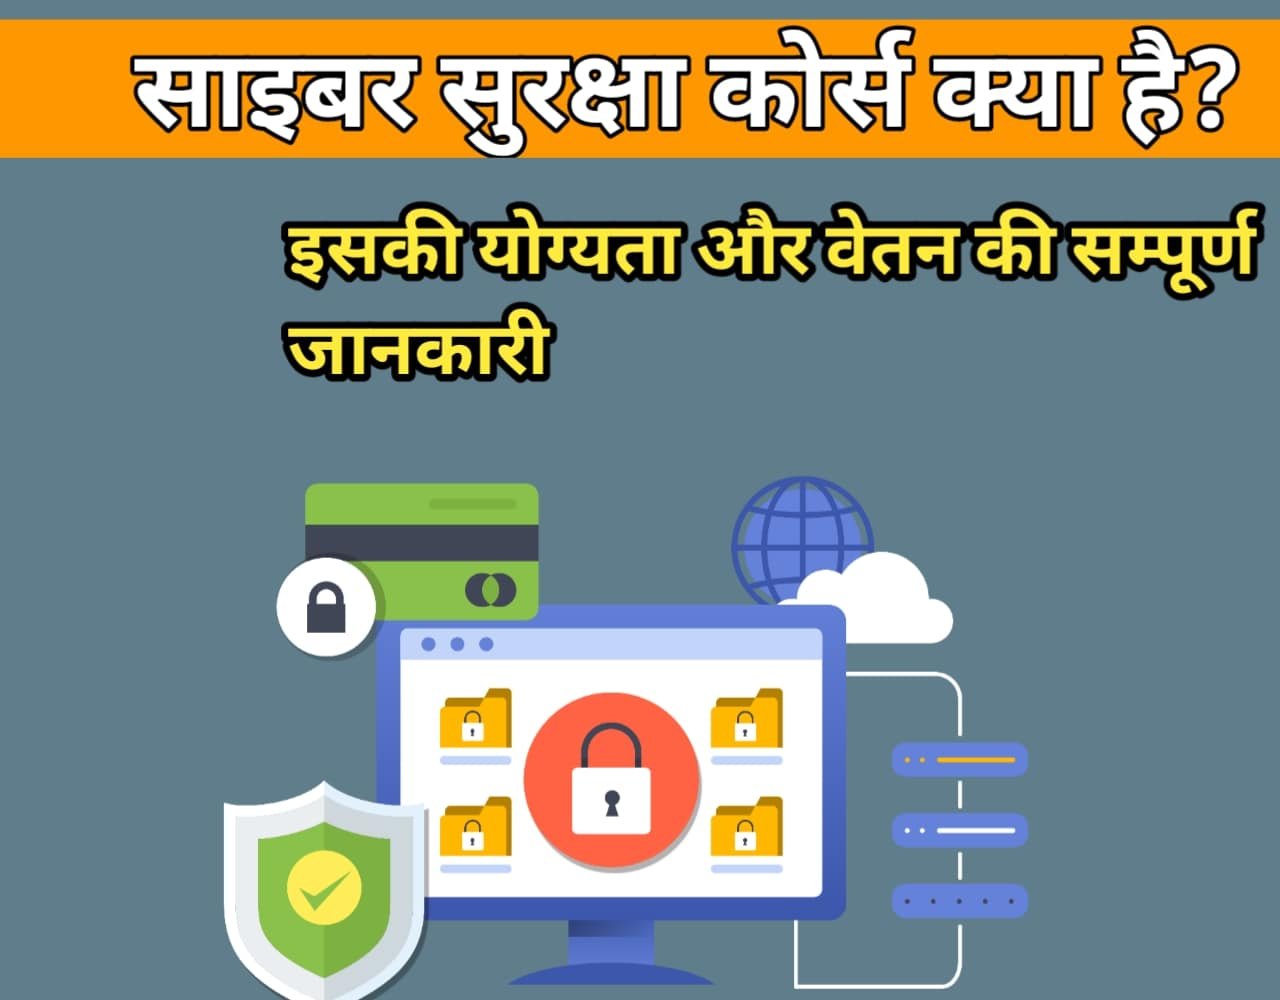 Cyber Security Course Details in Hindi | साइबर सुरक्षा कोर्स क्या है?